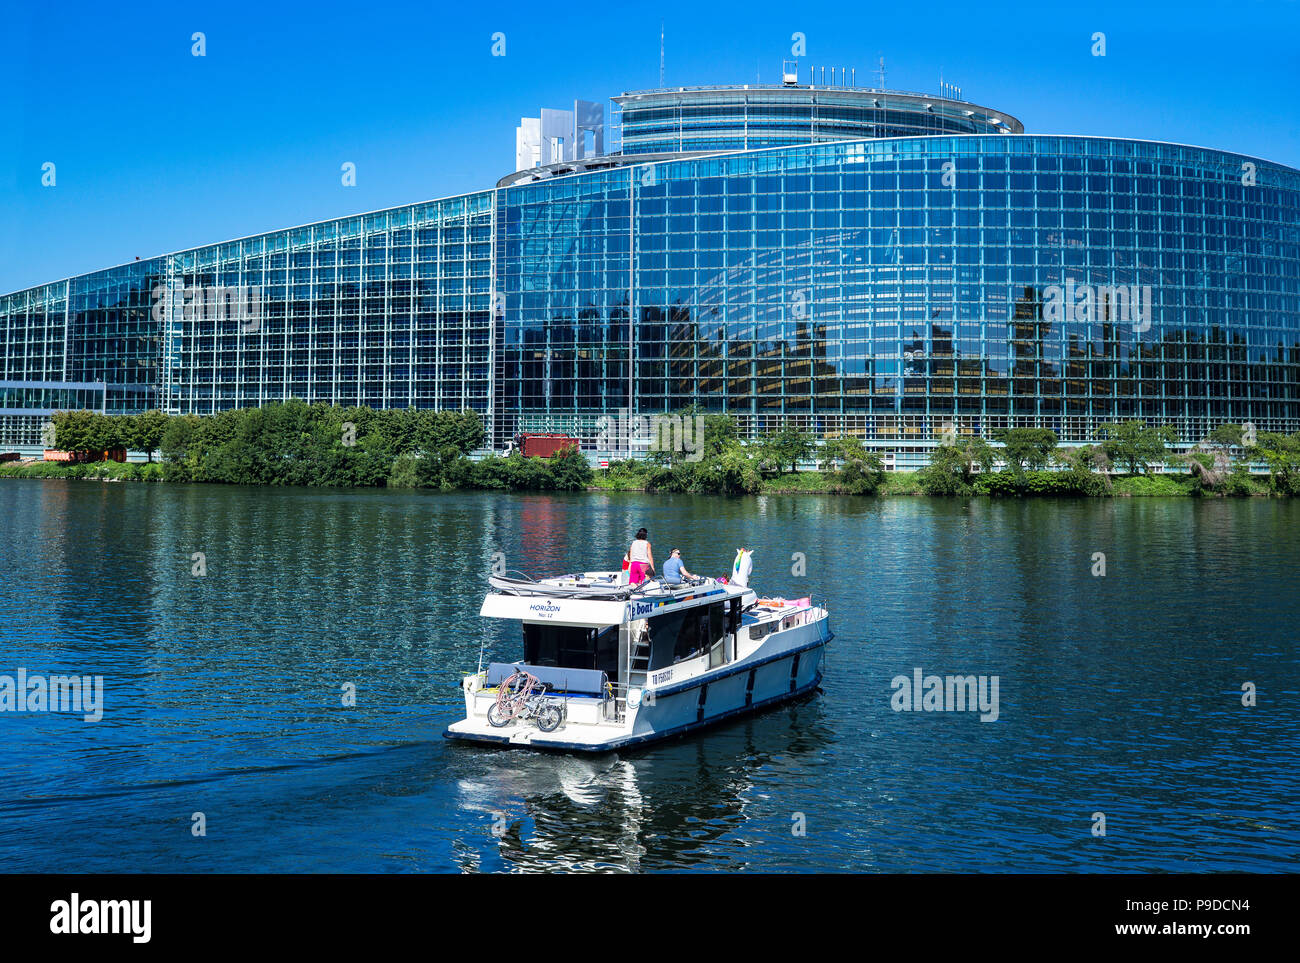 Estrasburgo, crucero en barco de recreo en el río Ill, edificio Louise Weiss, UE, Parlamento Europeo, Alsacia, Francia, Europa, Foto de stock